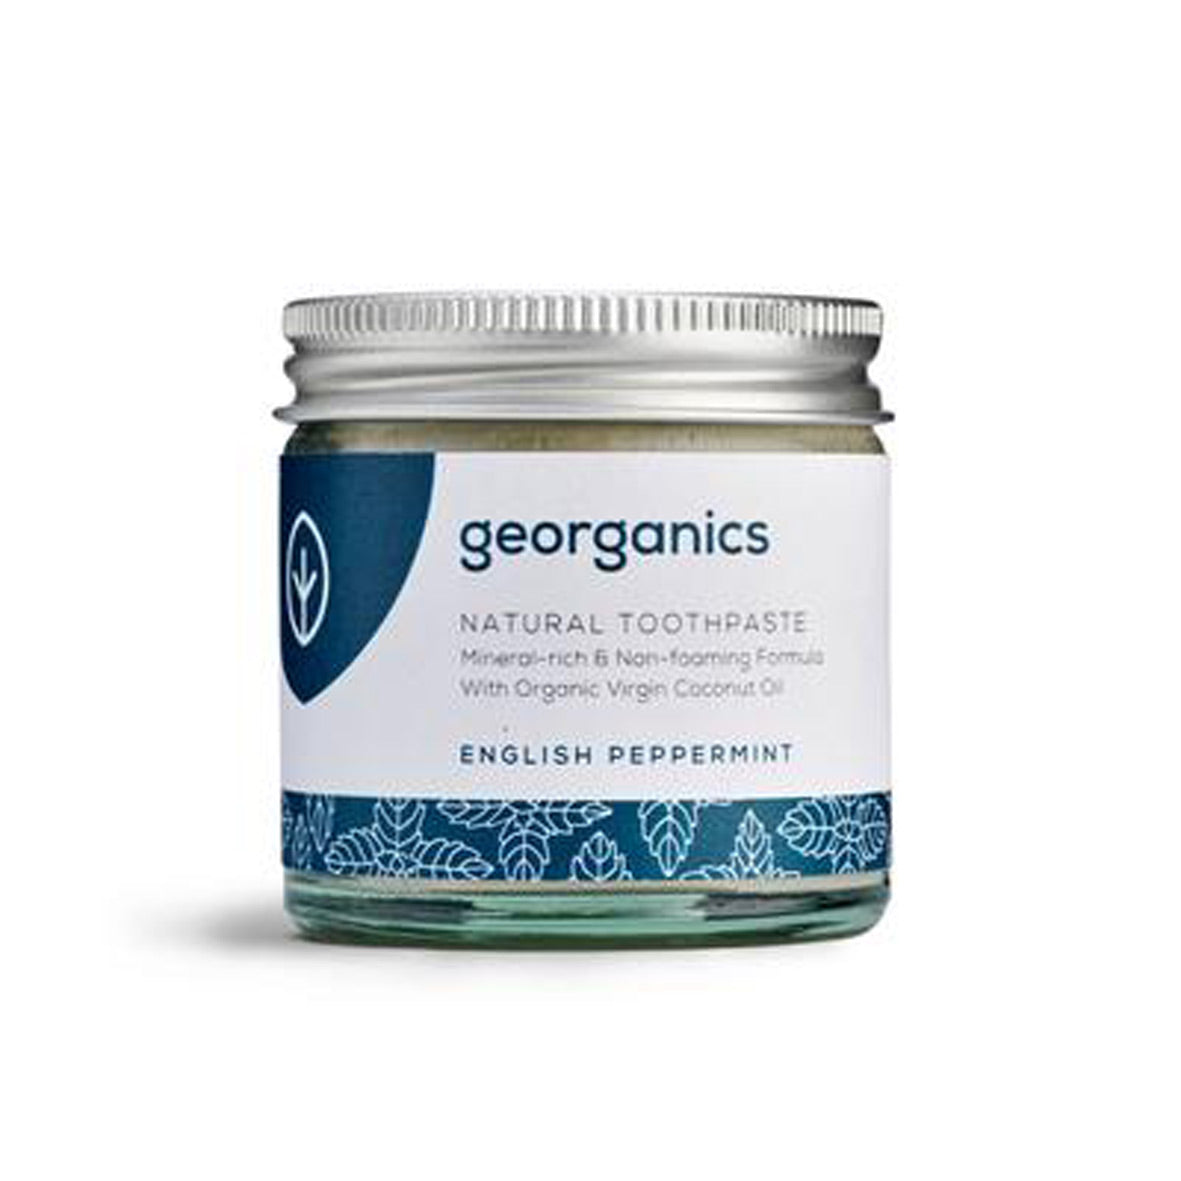 Georganics Toothpaste English Peppermint